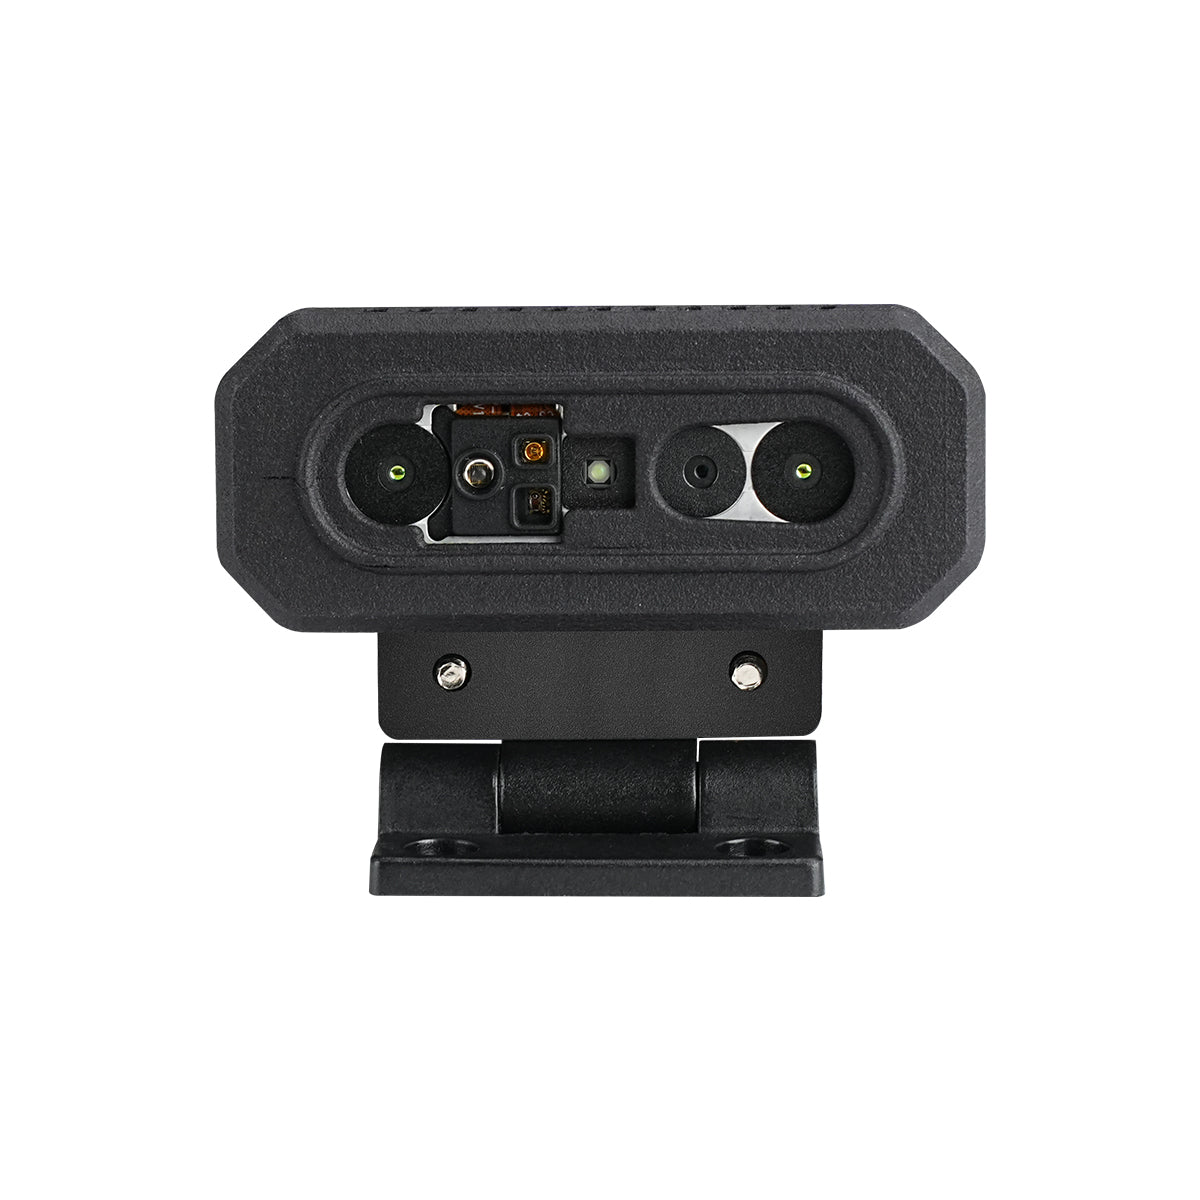 ORBBEC® Gemini Plus Camera ROS Robot SLAM Smart Car Vision Camera